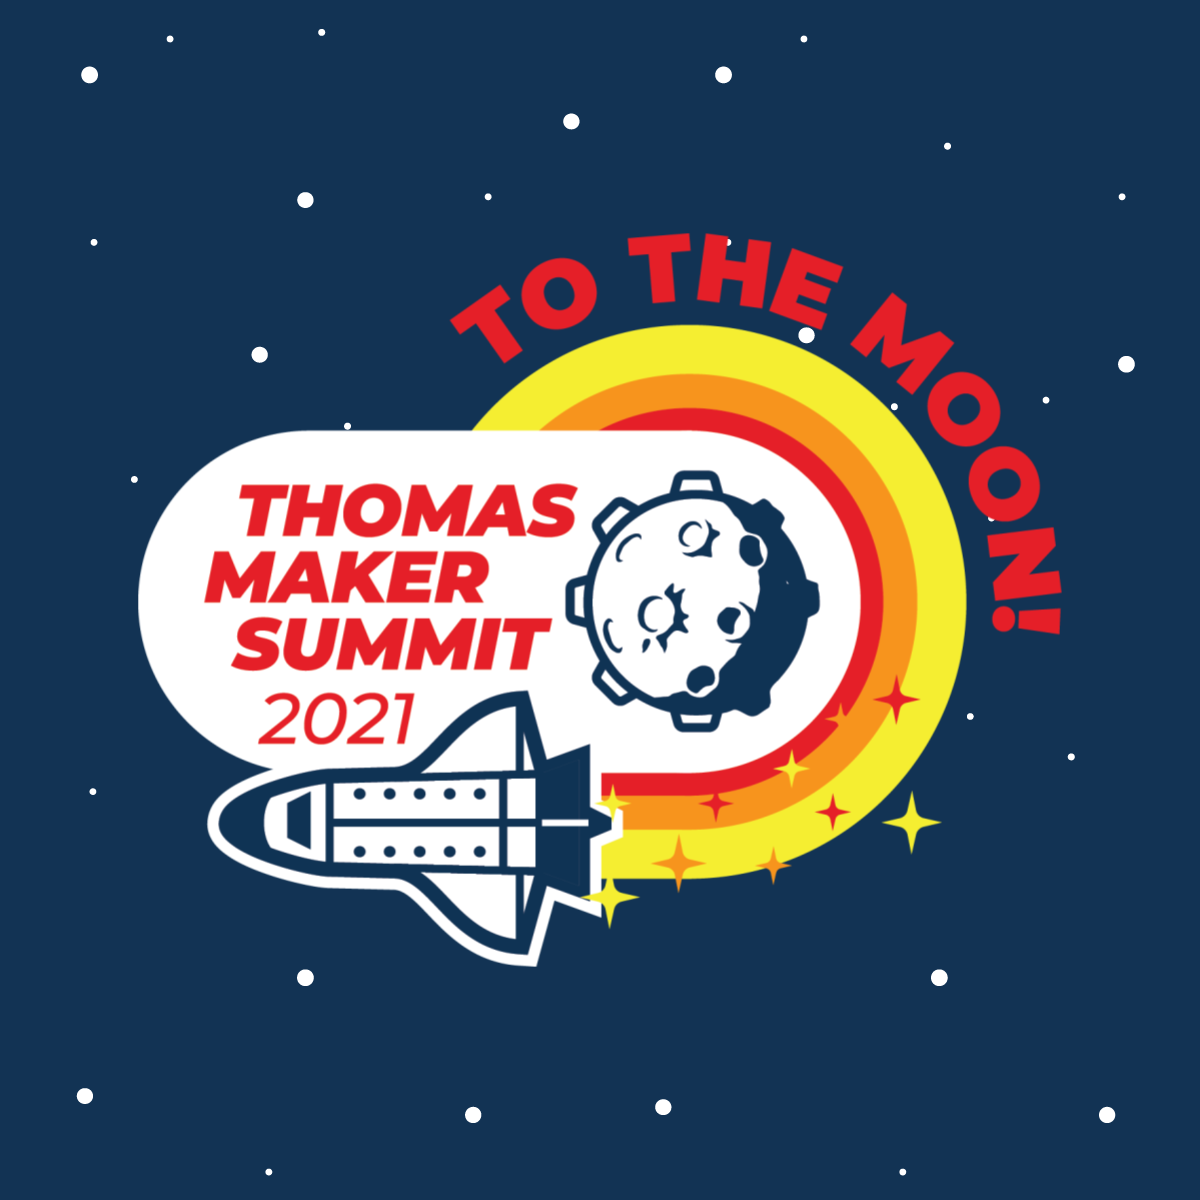 Thomas Maker Summit